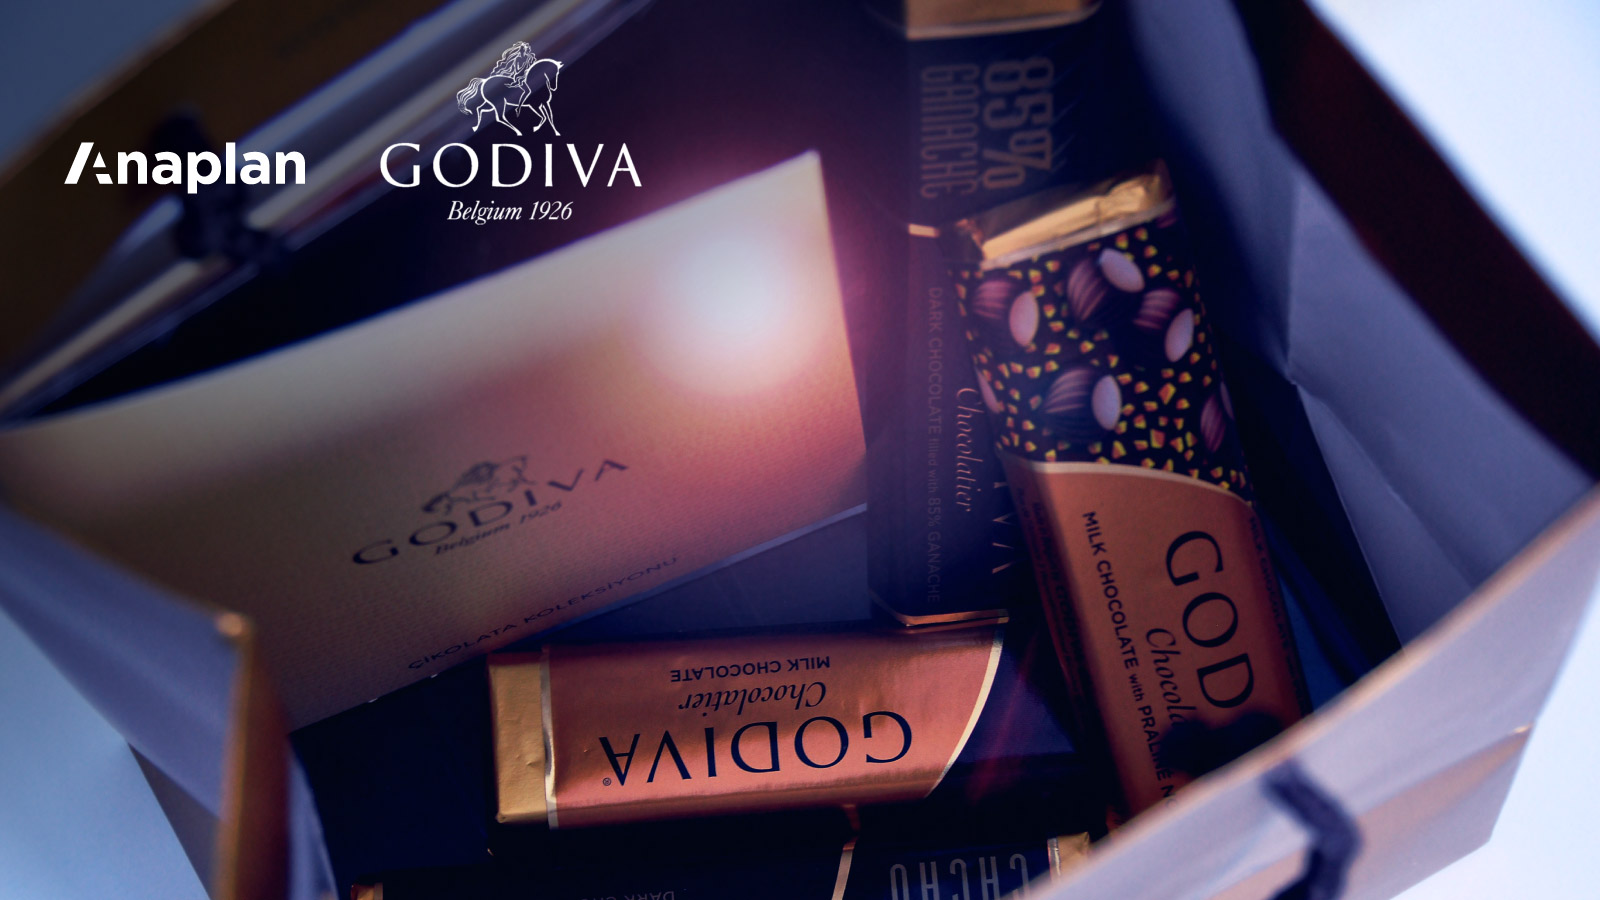 Bag of chocolate from Godiva